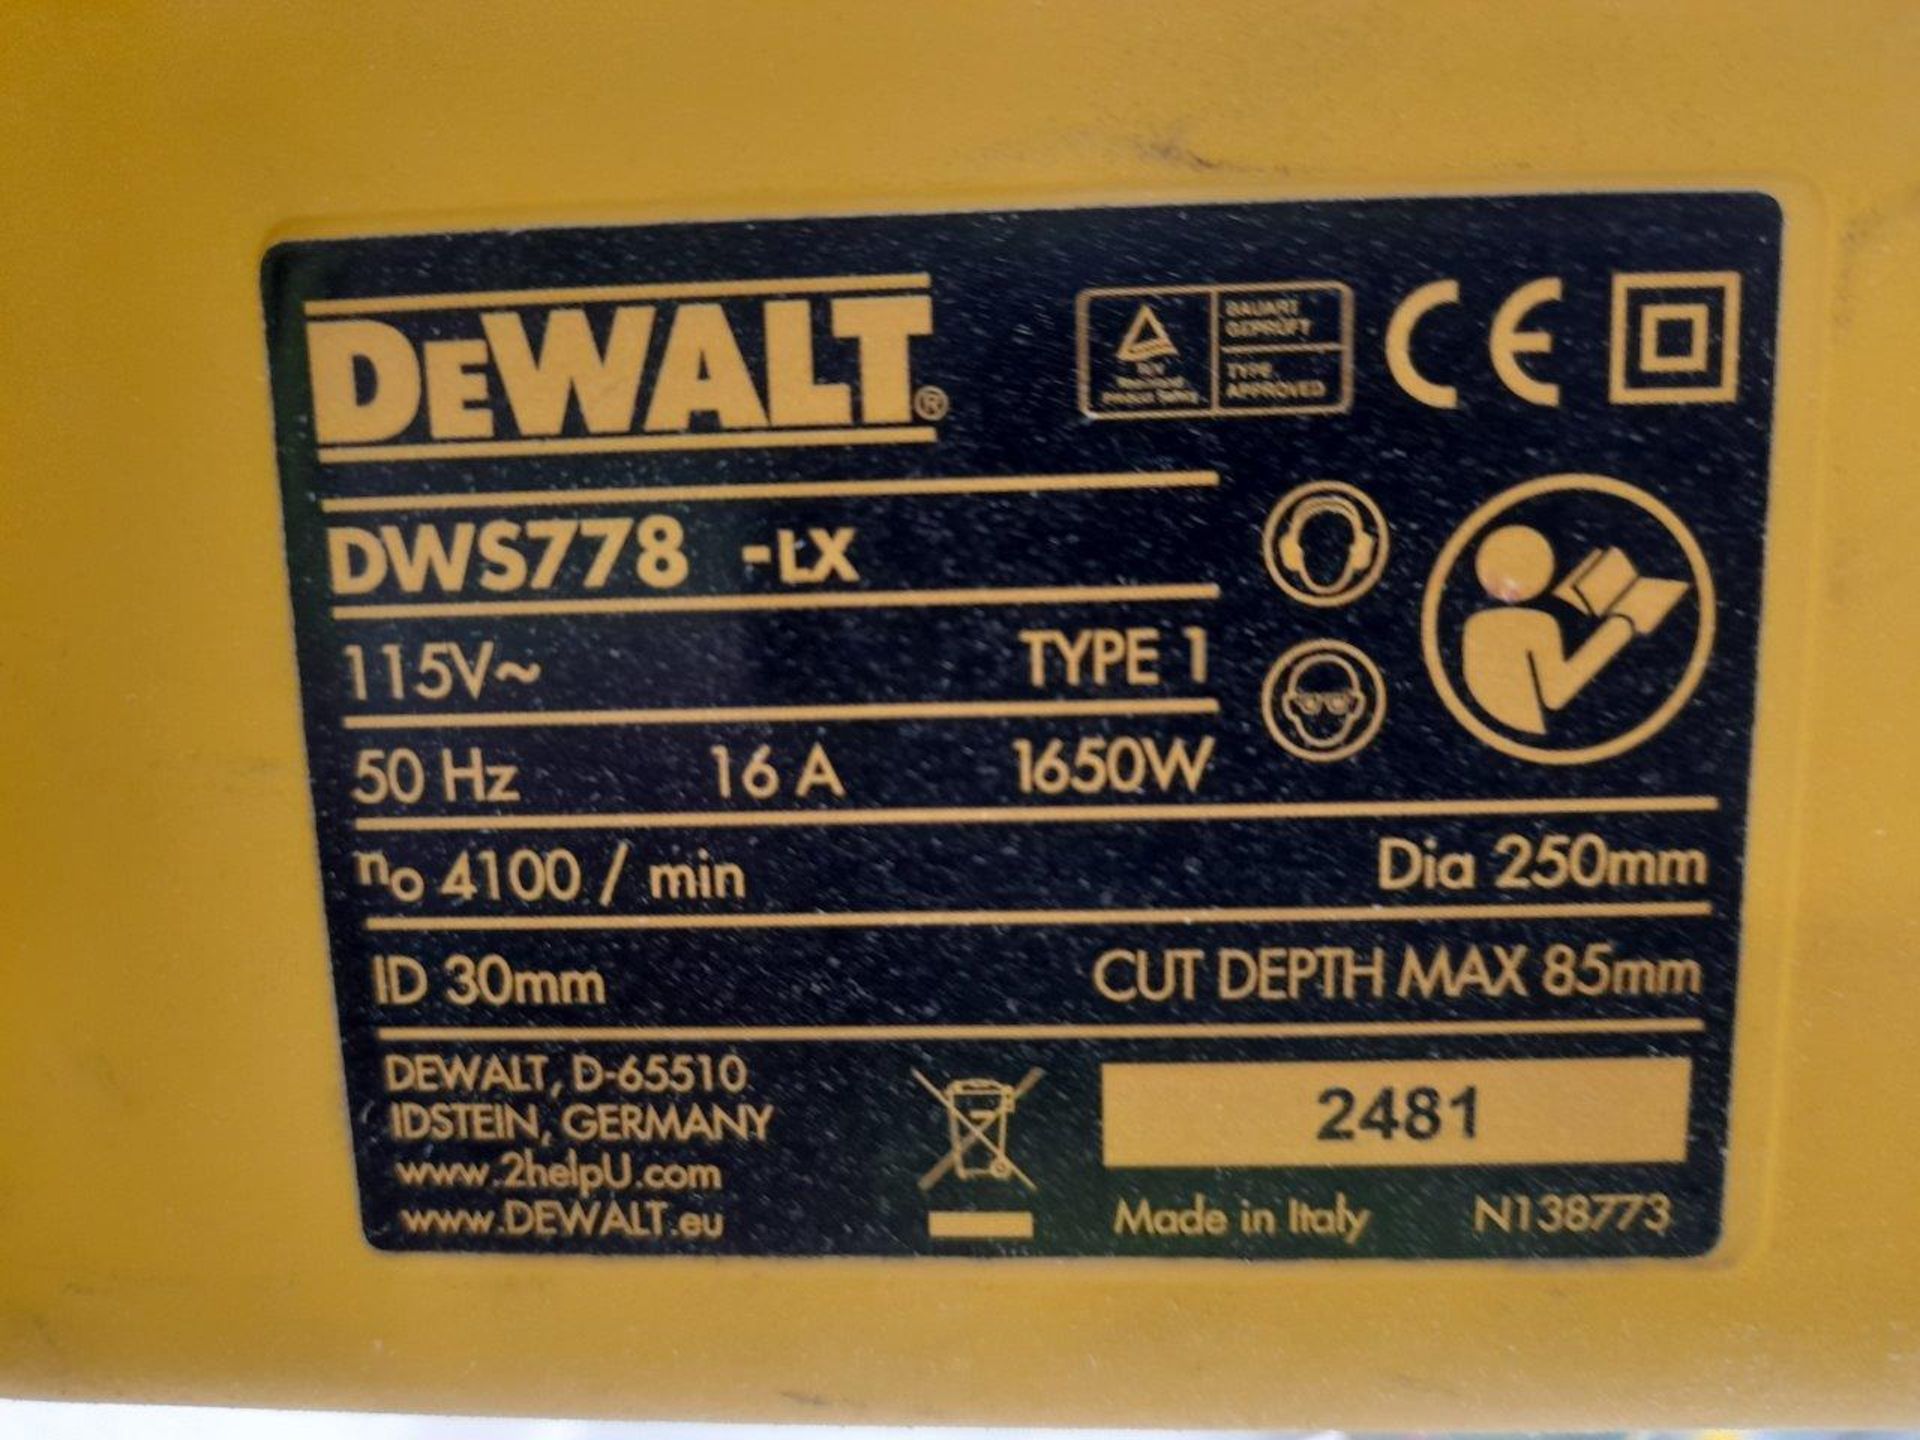 Dewalt DWS 778-LX mitre saw - Image 3 of 3